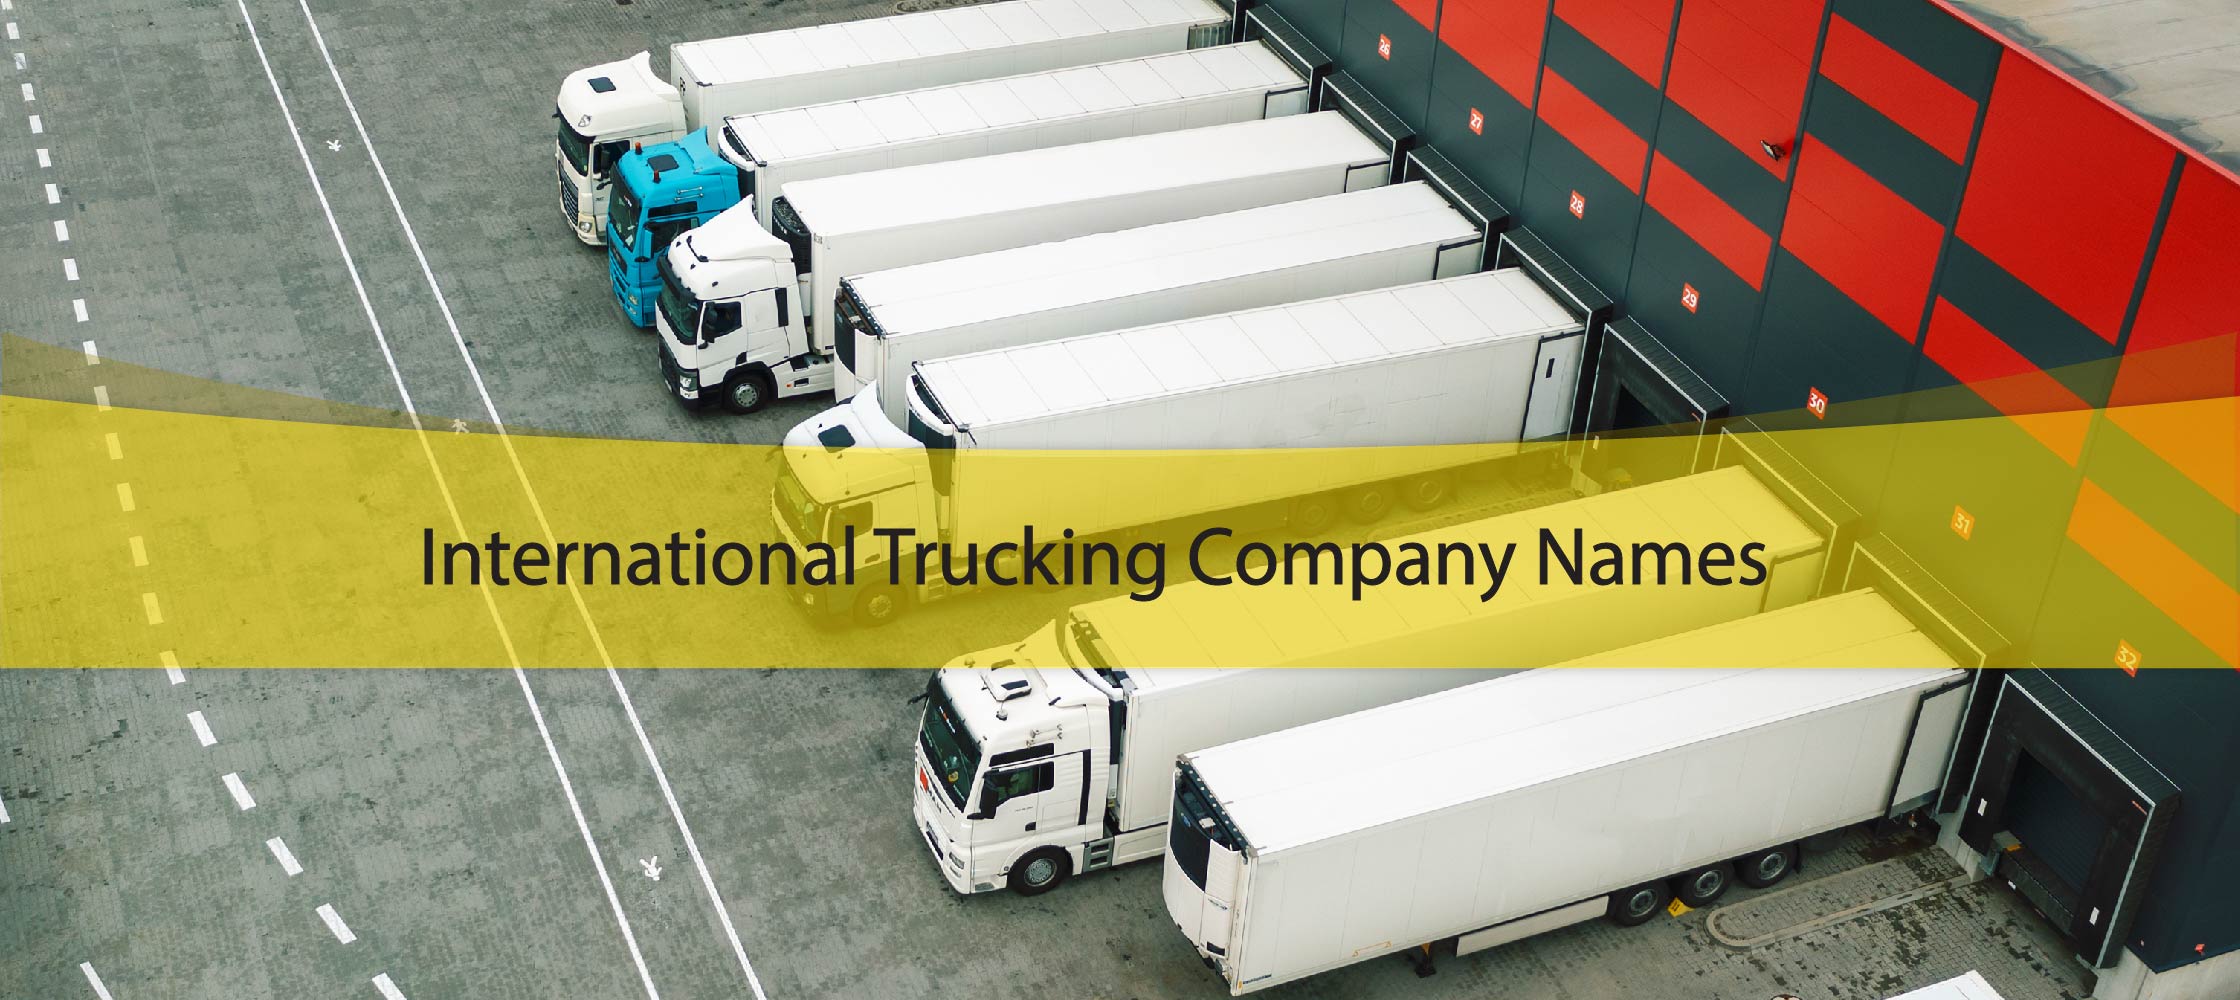 International Trucking Company Names